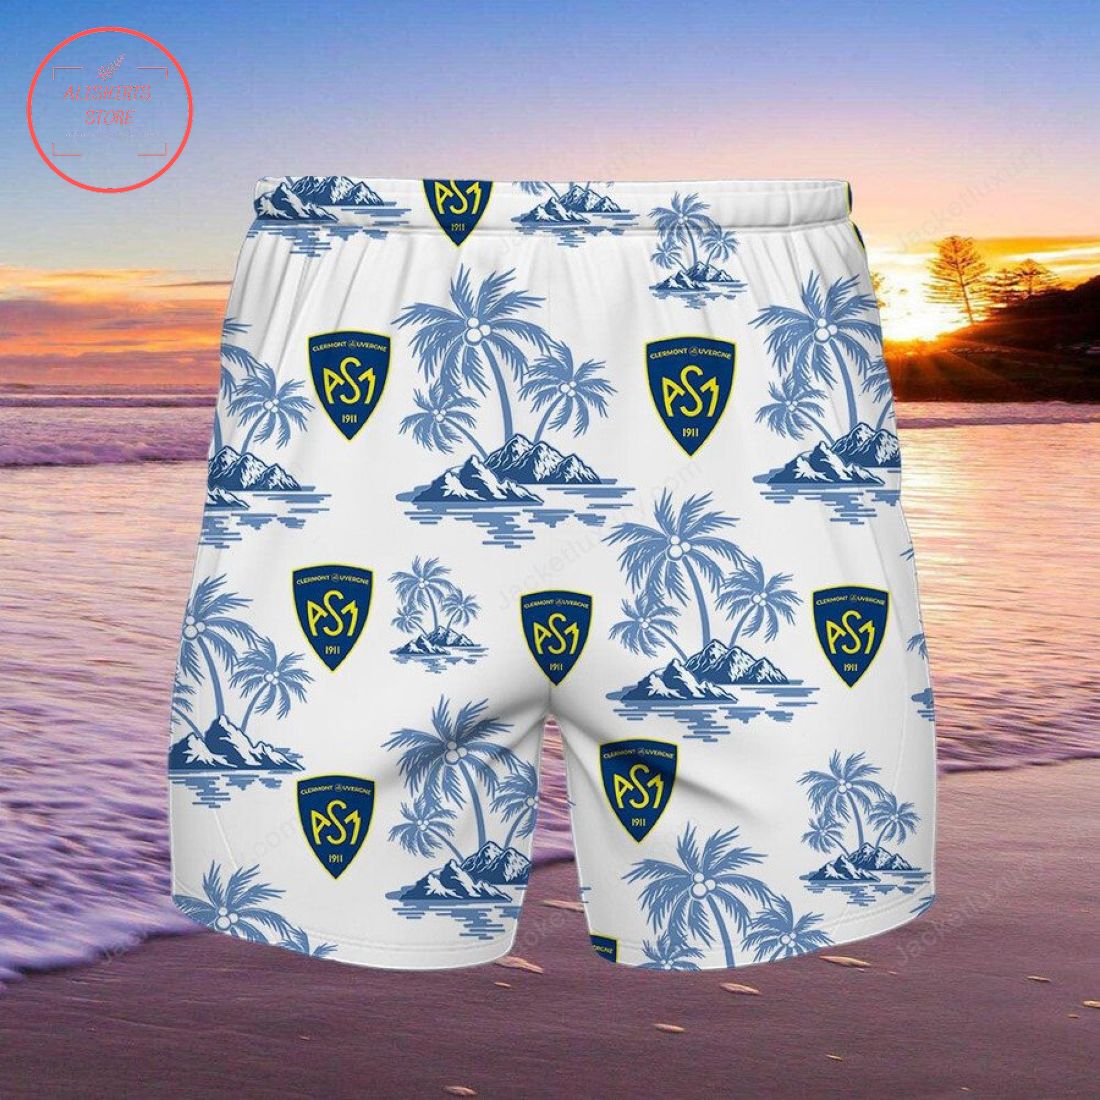 ASM Clermont Auvergne Hawaiian Shirt and Beach Shorts